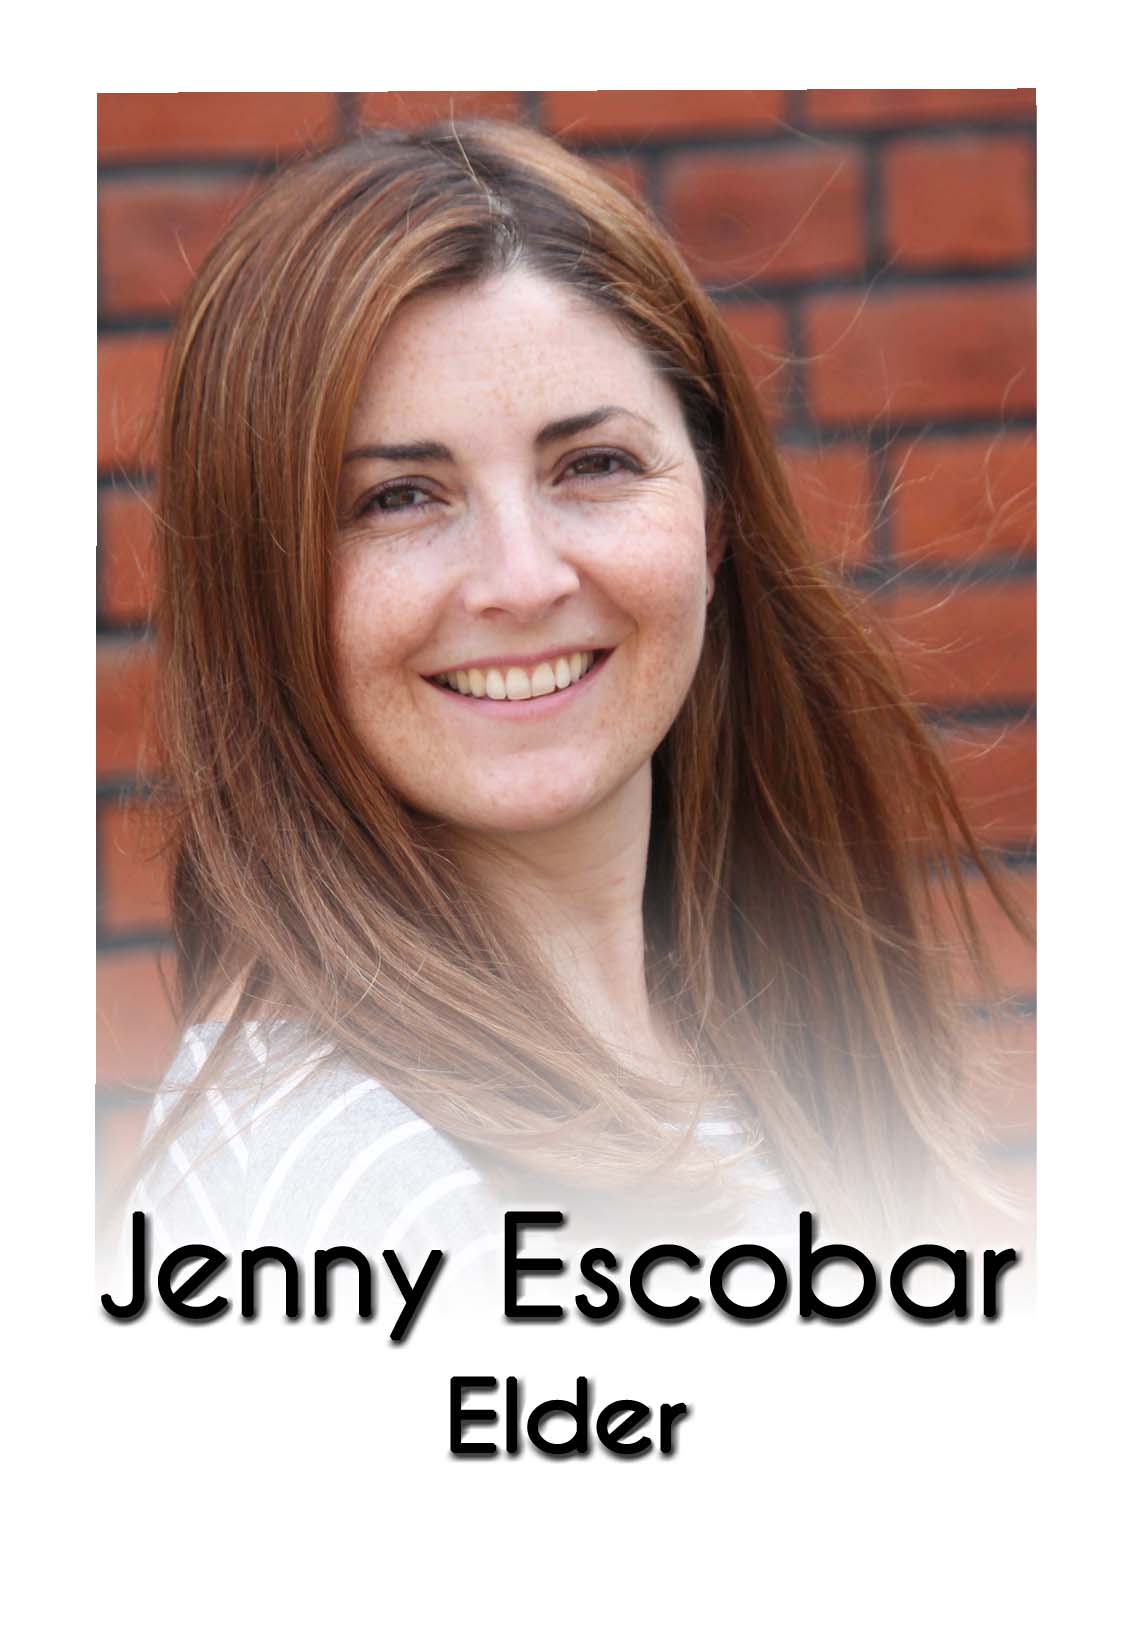 Jenny Escobar labelled